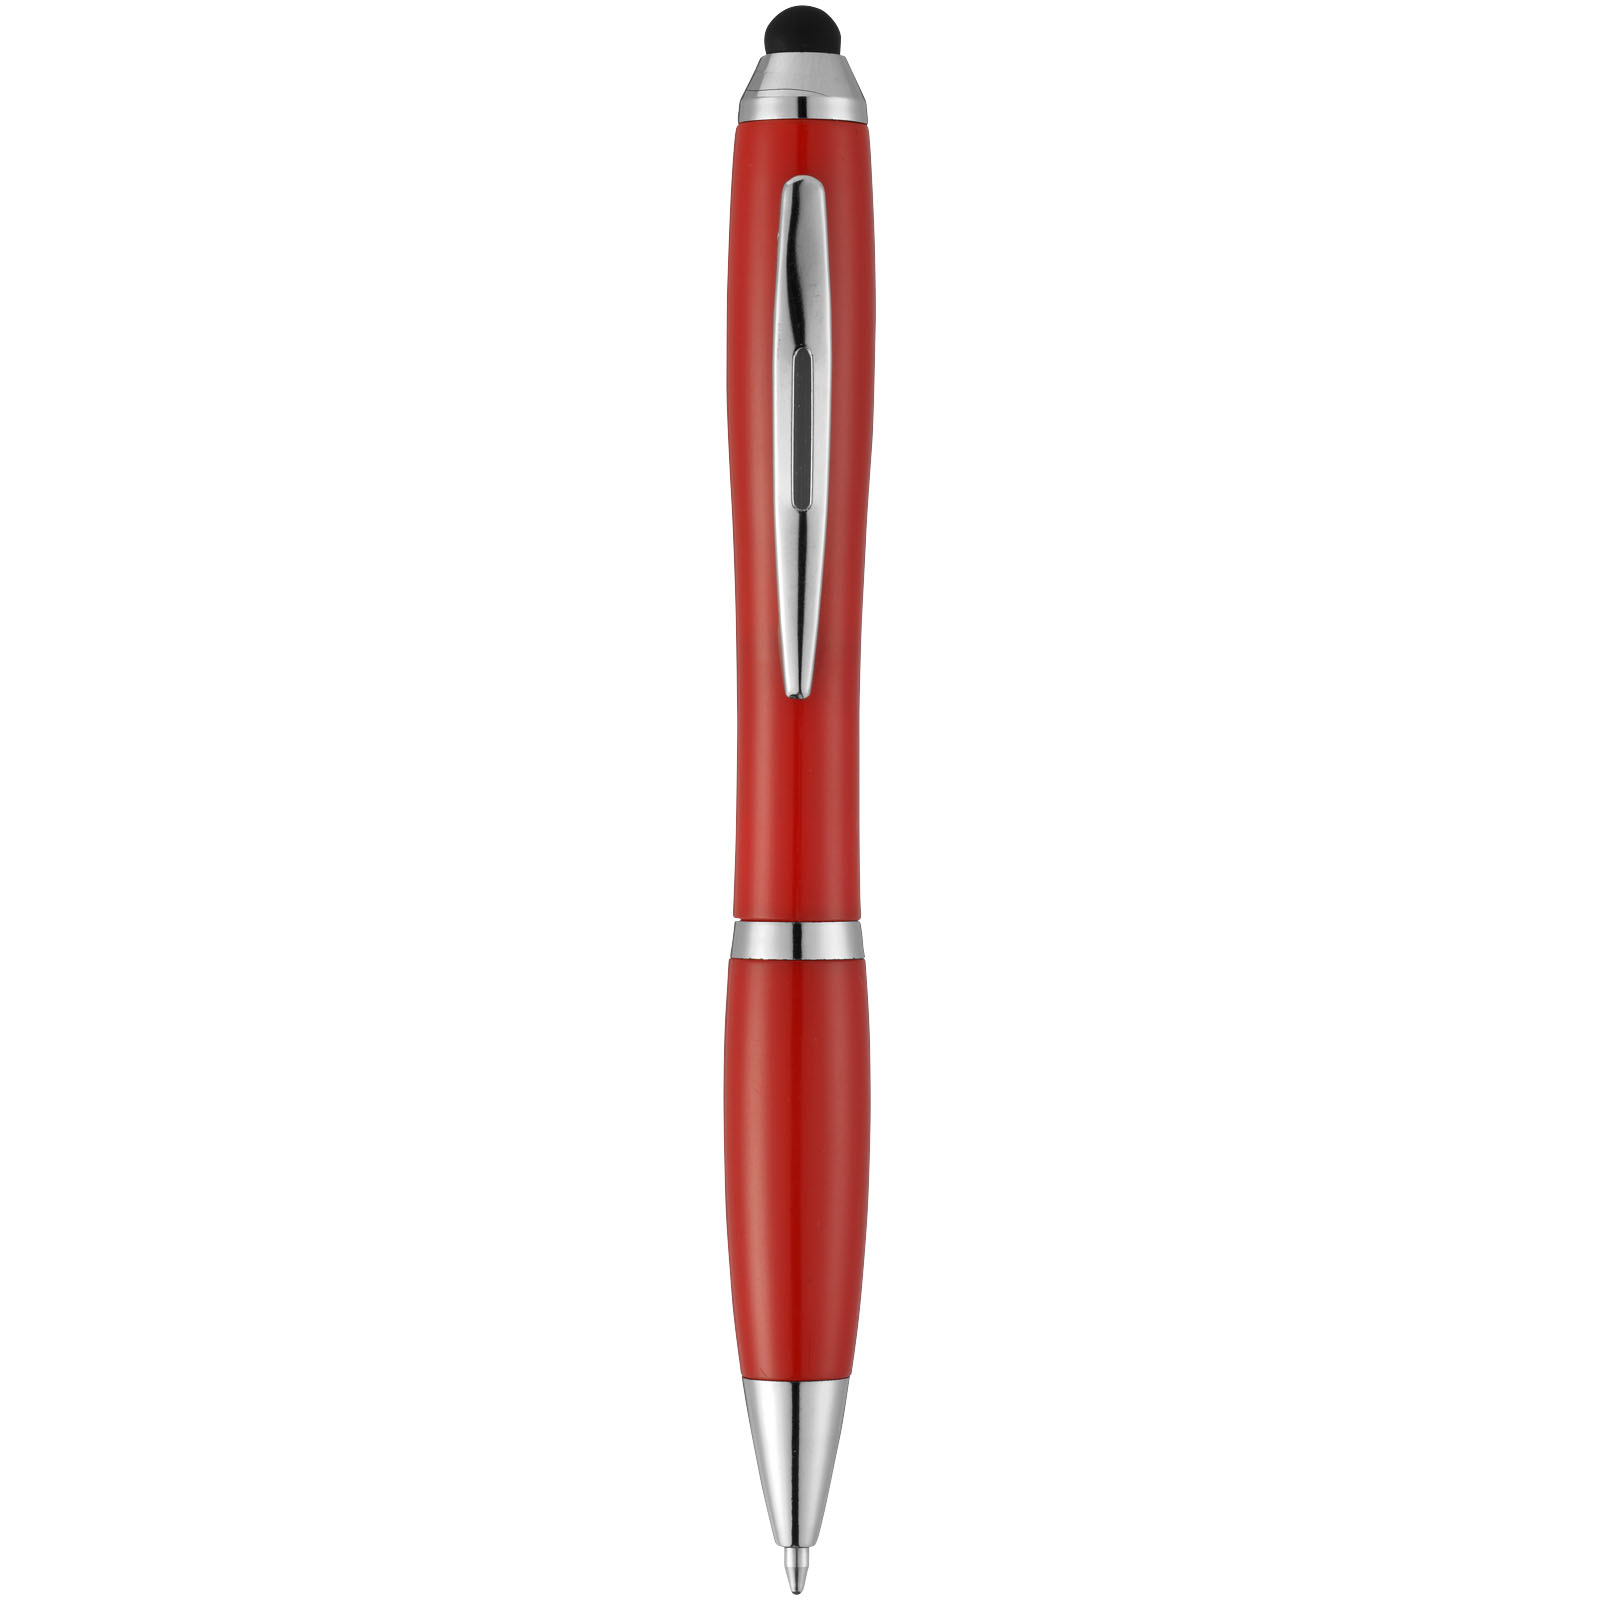 Advertising Ballpoint Pens - Nash stylus ballpoint pen with coloured grip - 1